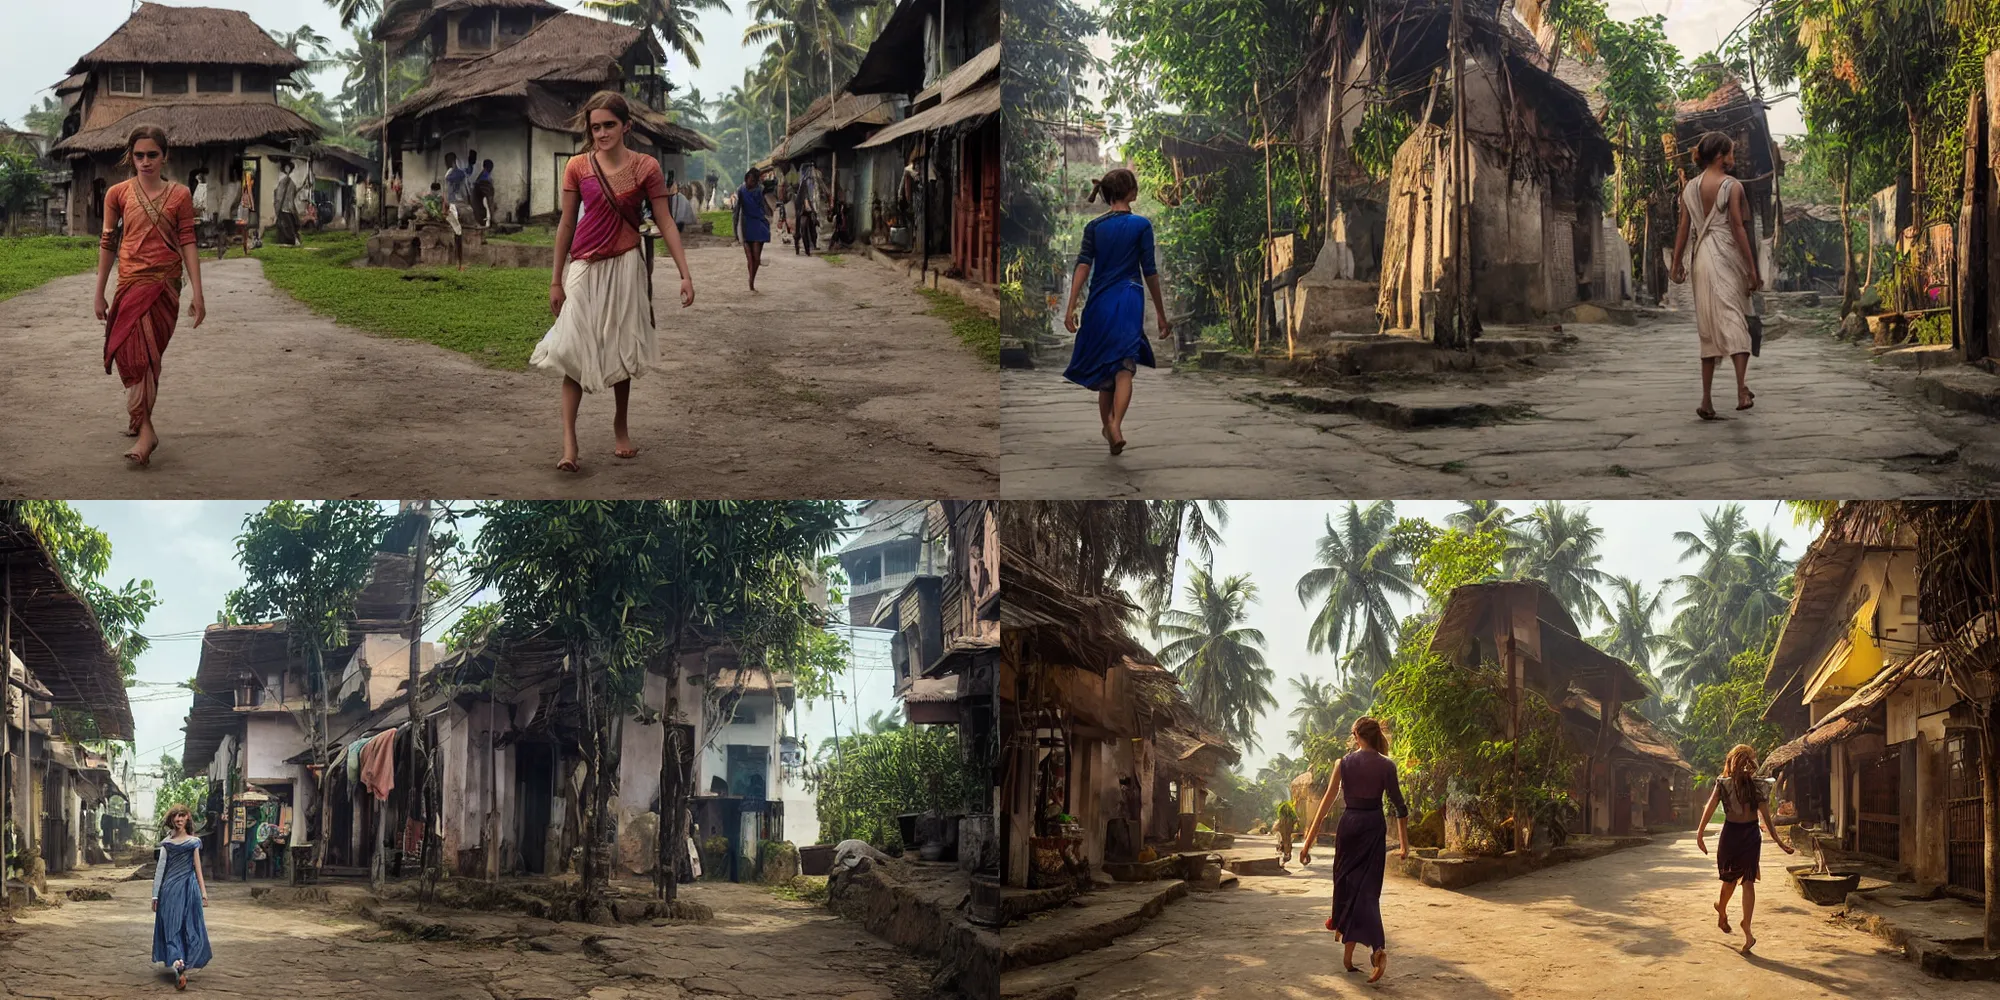 Prompt: emma watson walking in the steets of a kerala village, cinematic, ultra realistic, volumetric lighting, hdr